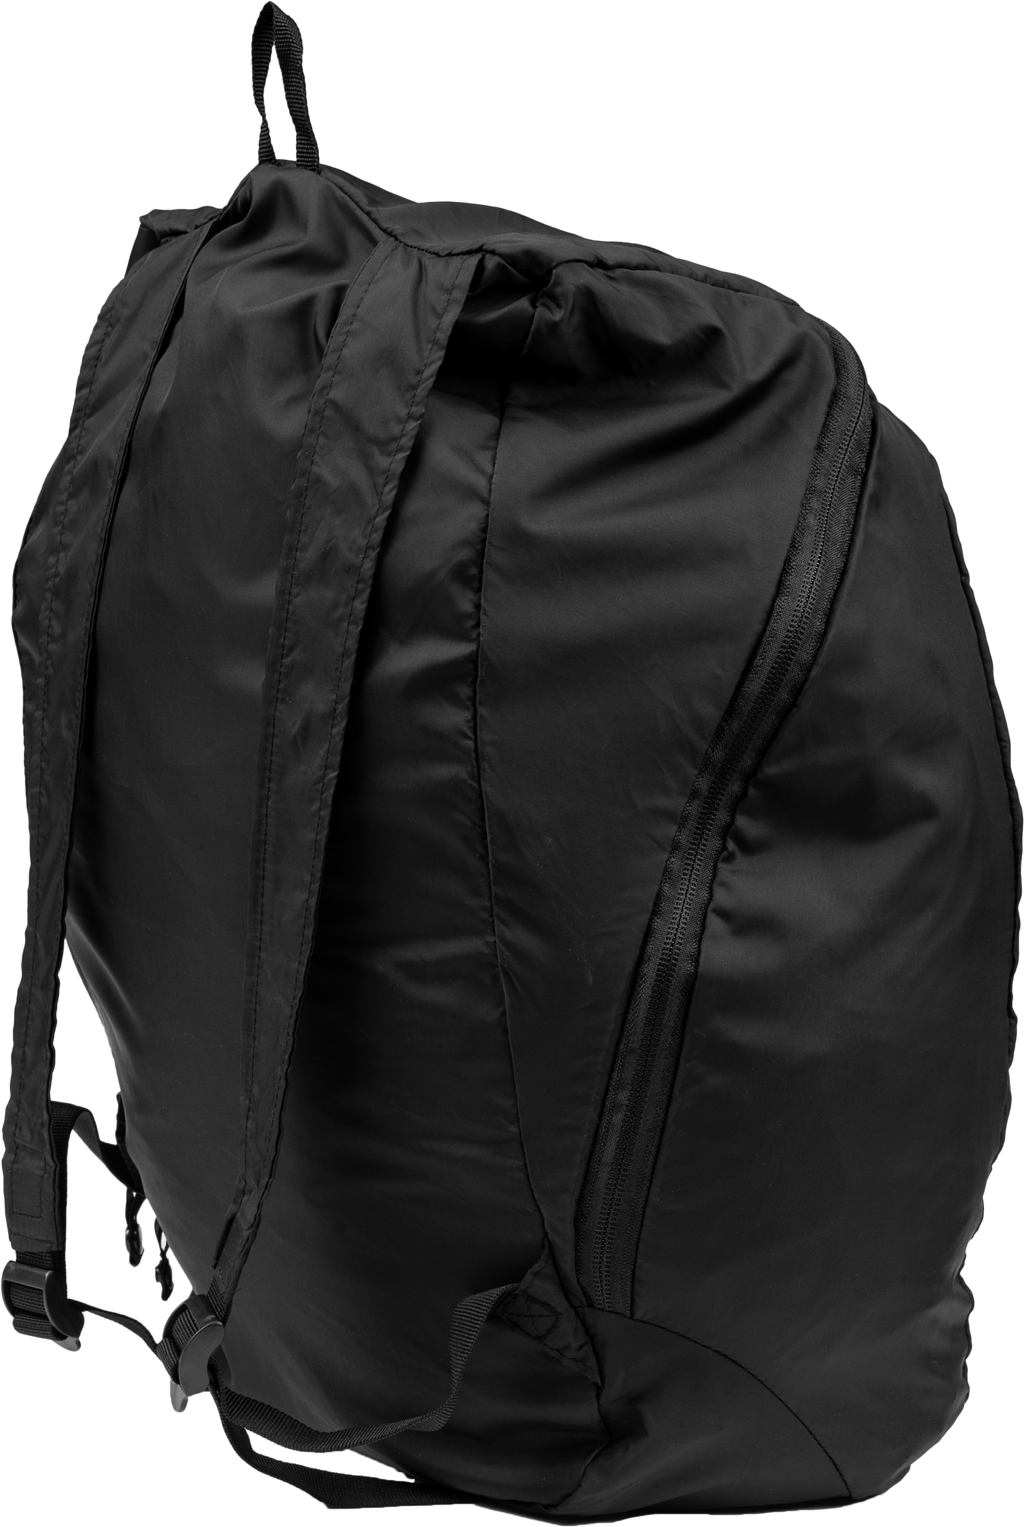 Harddrive Compact Backpack Black